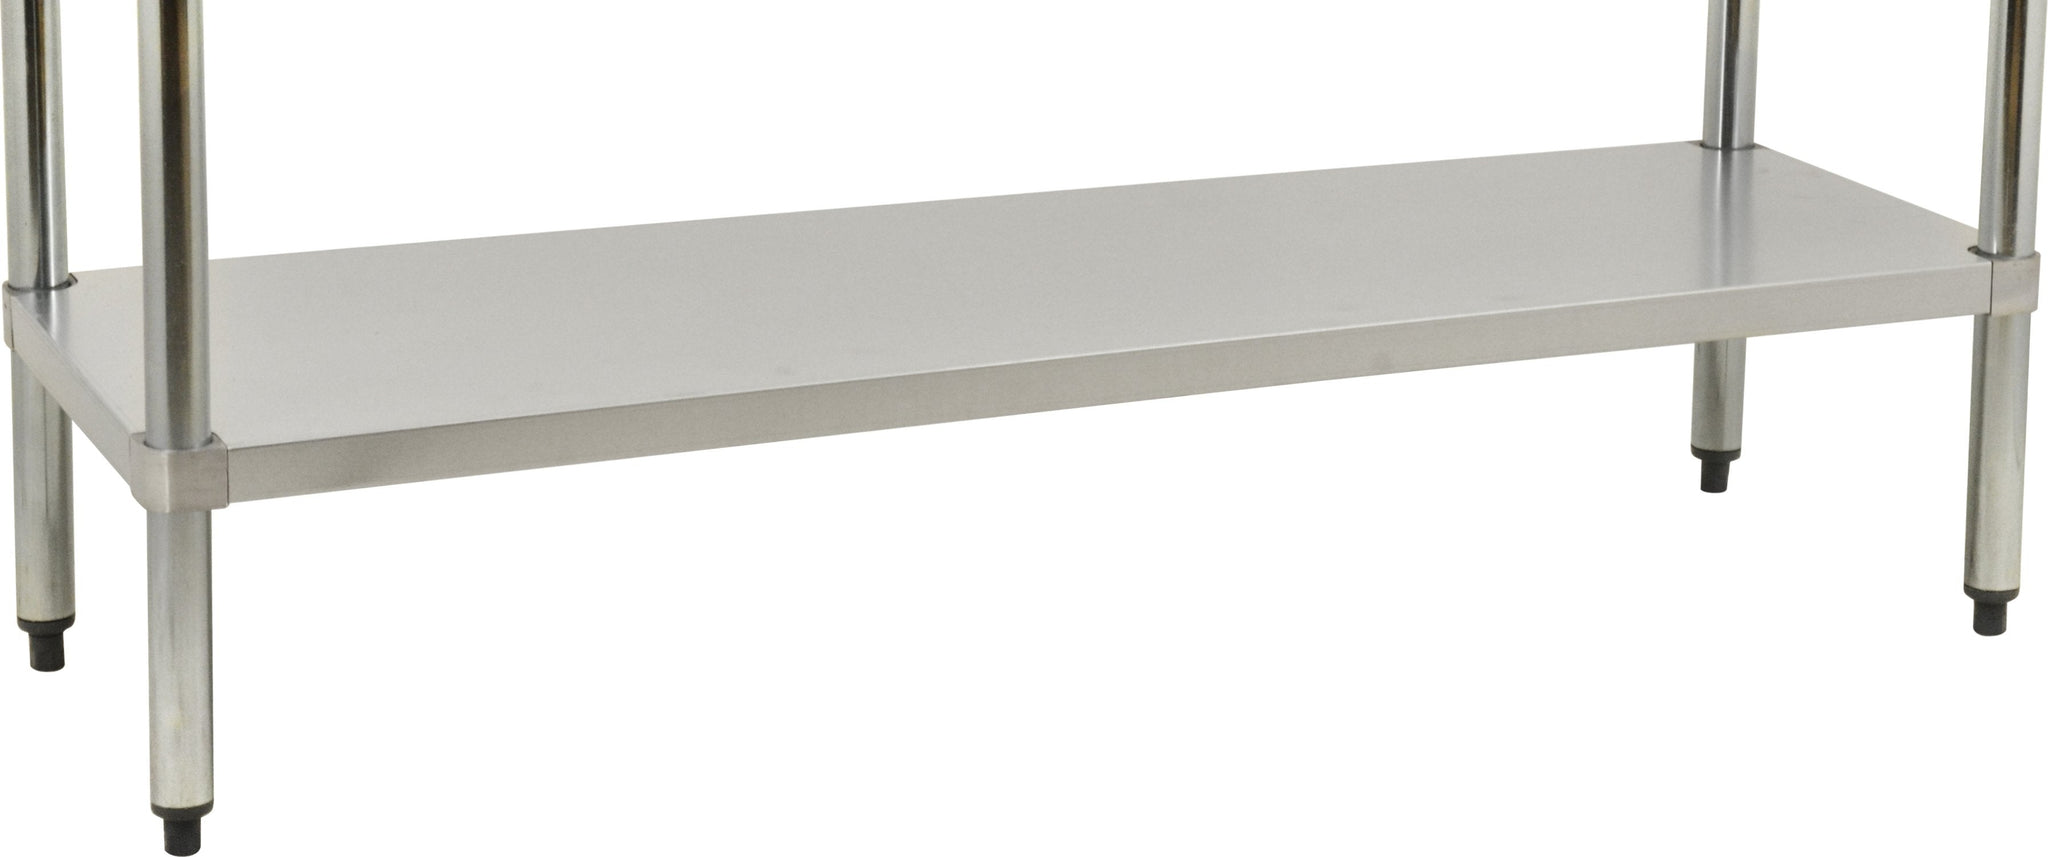 Omcan - 30” x 72” Stainless Steel Undershelf For Work Table - 21619